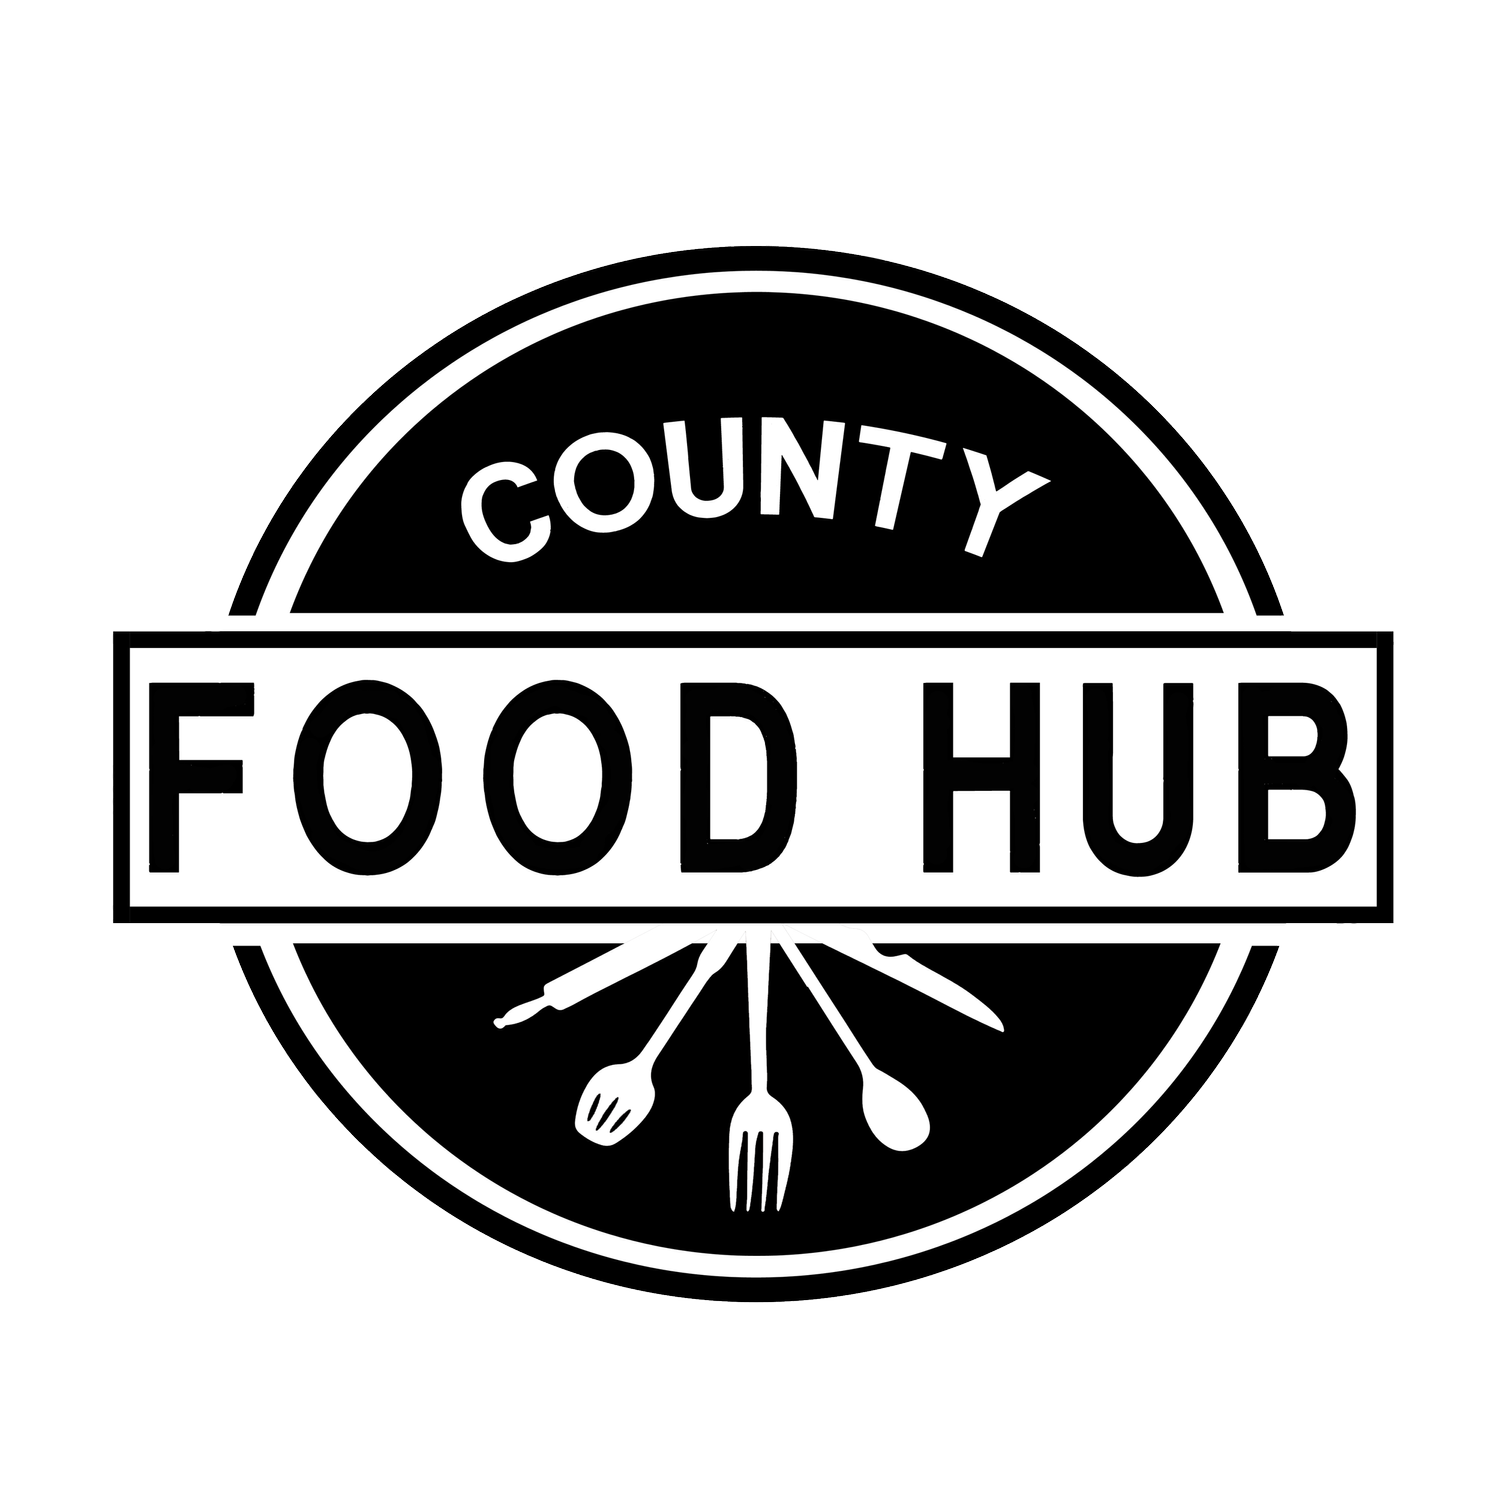 County Food Hub